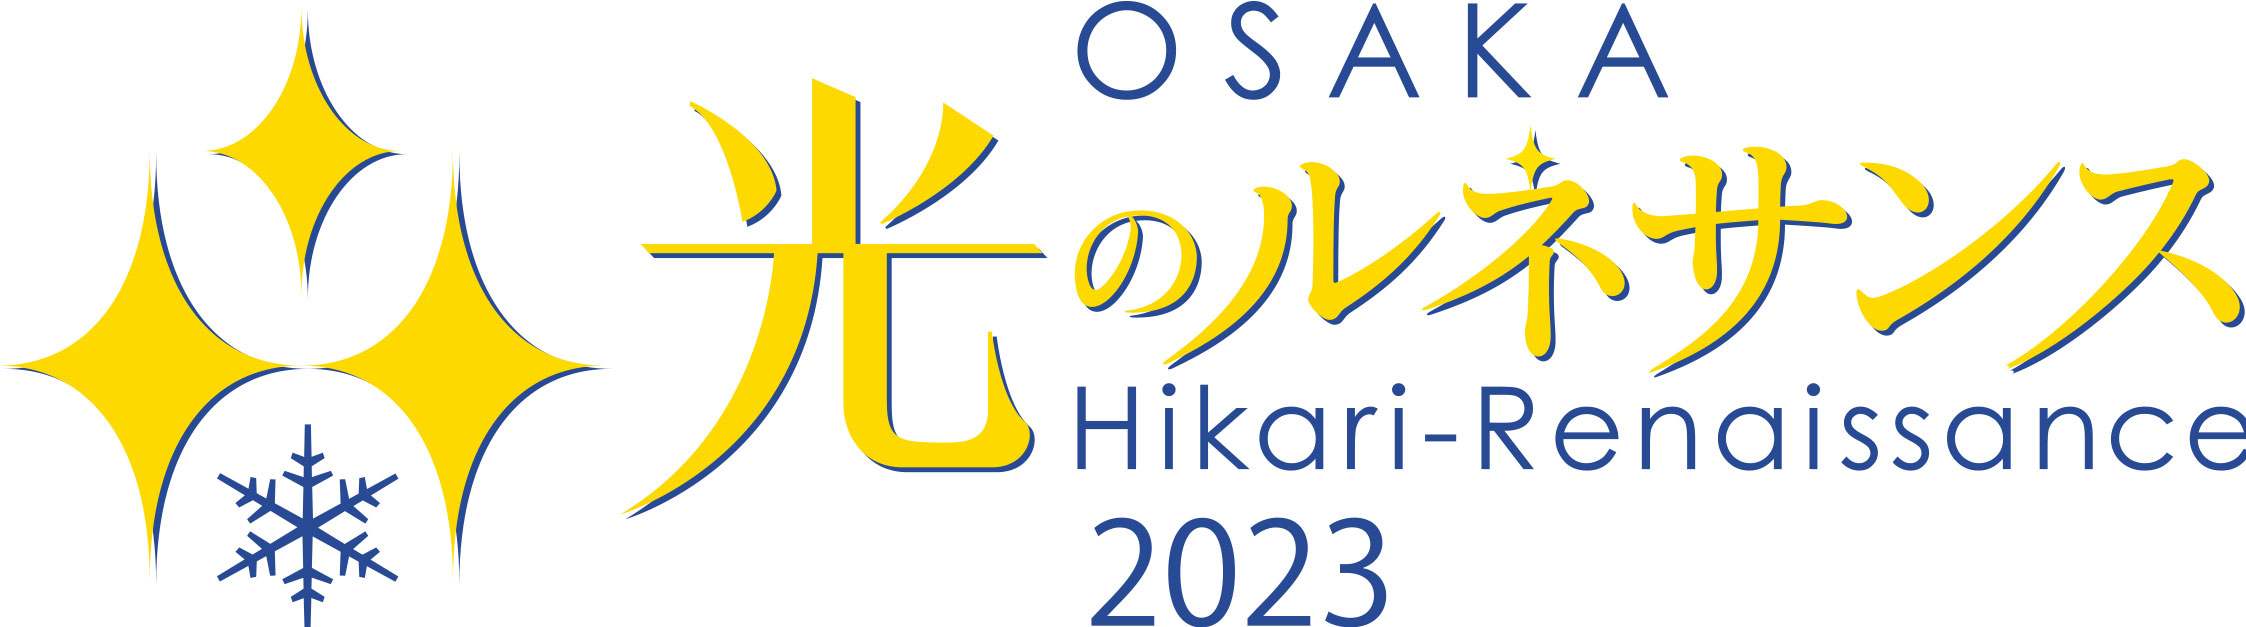 OSAKA光のルネサンス2022 ロゴ02